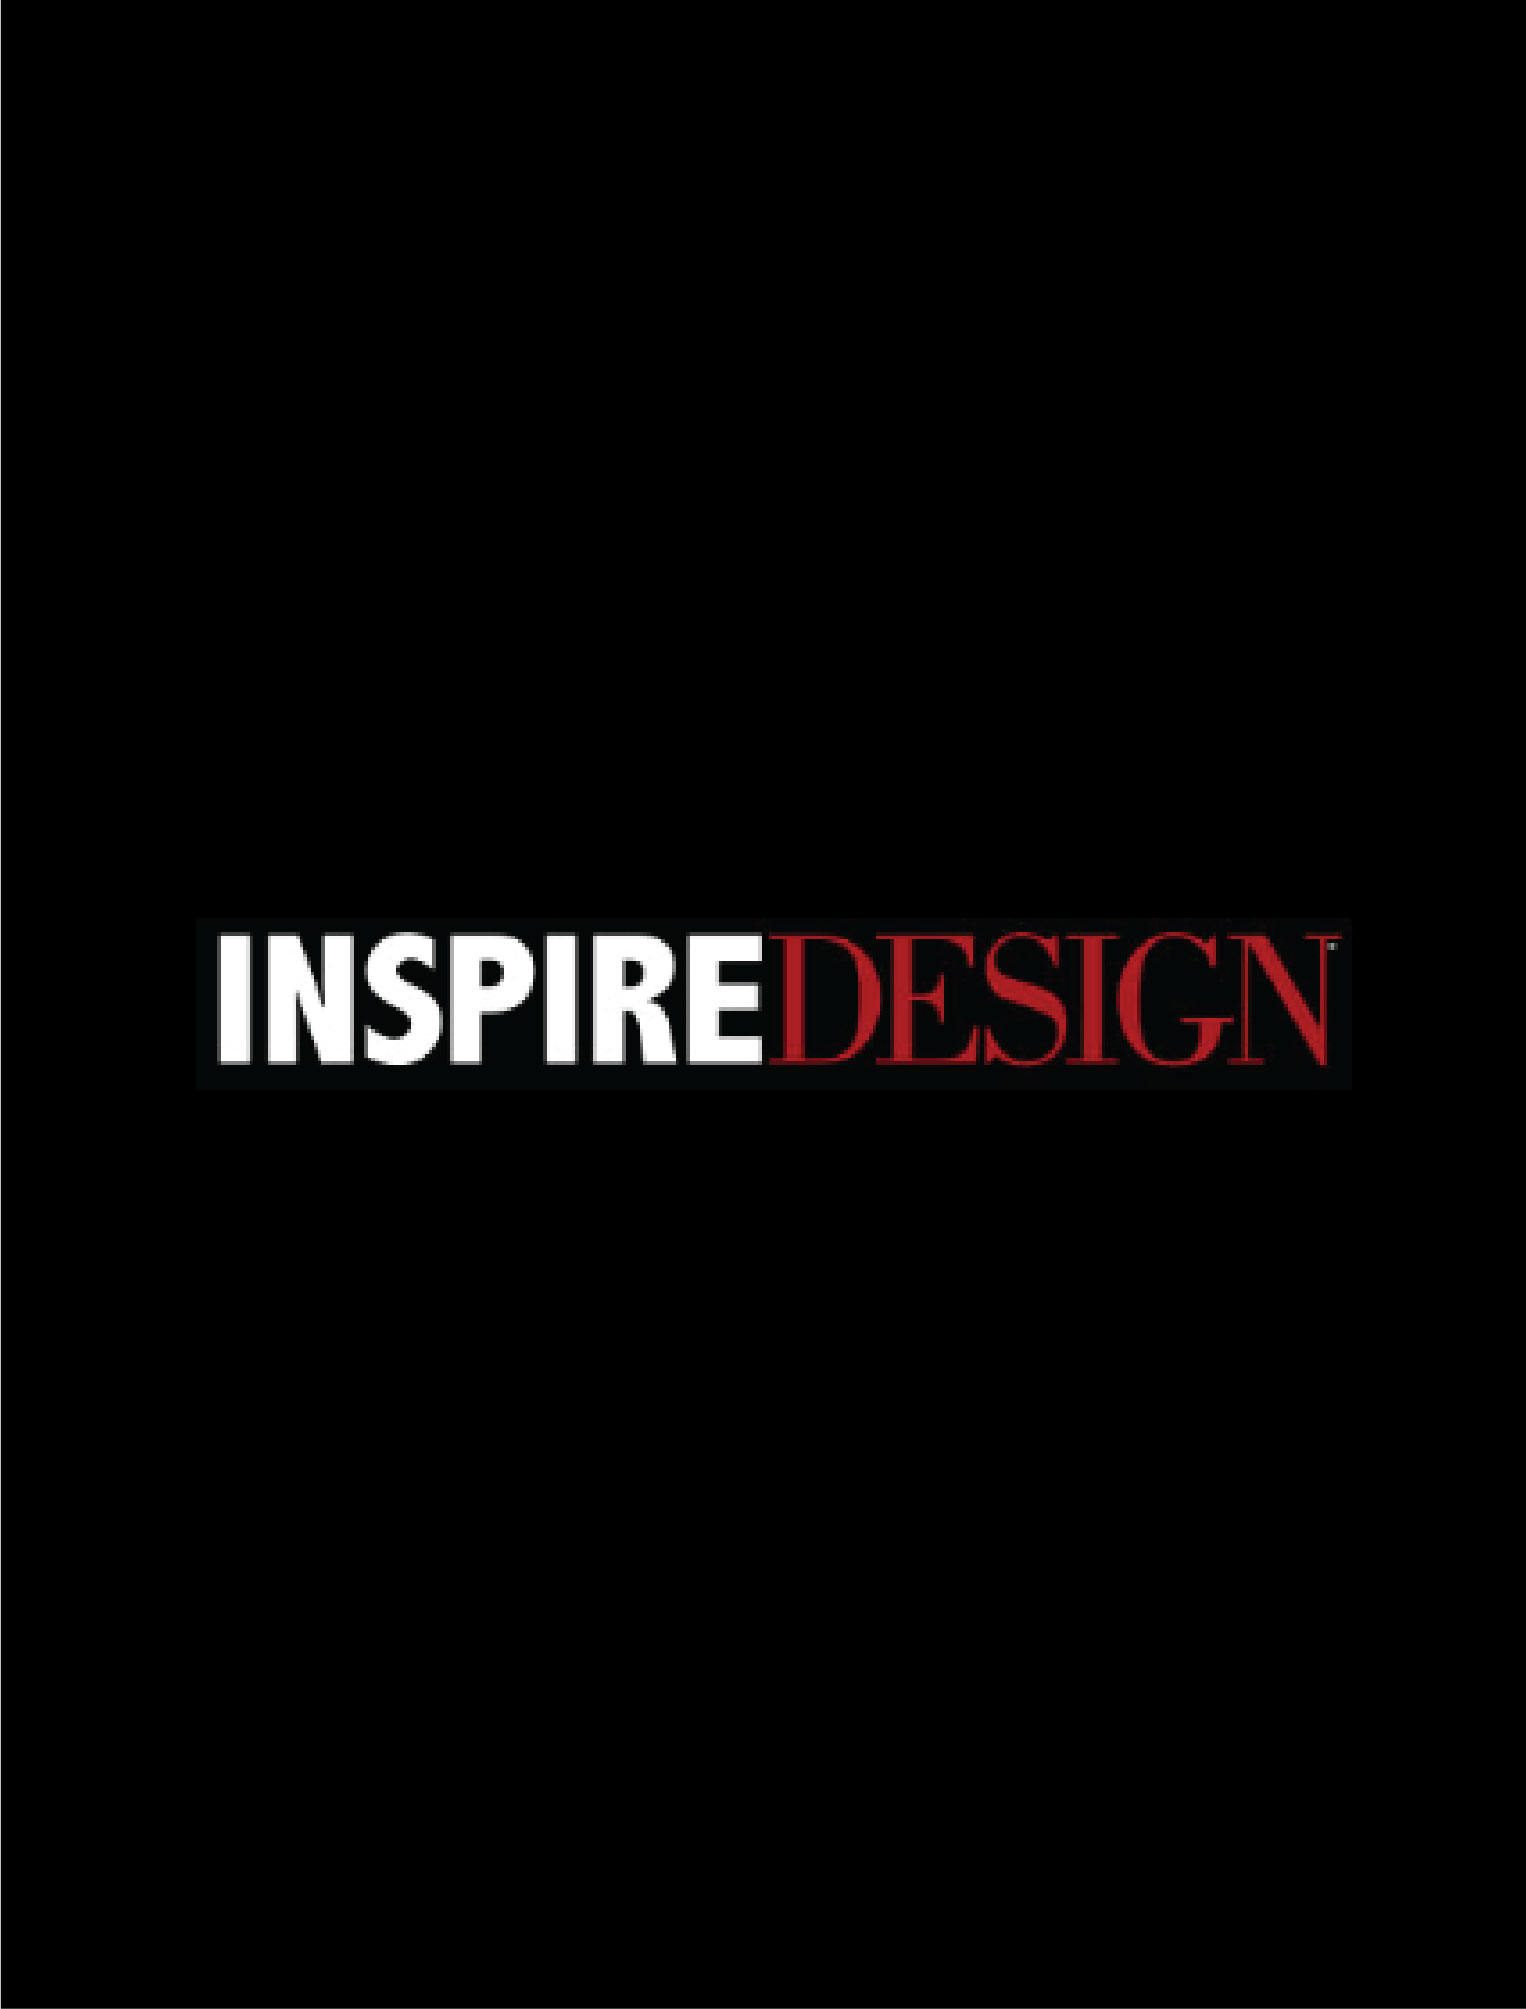 logo of the magazine inspire design